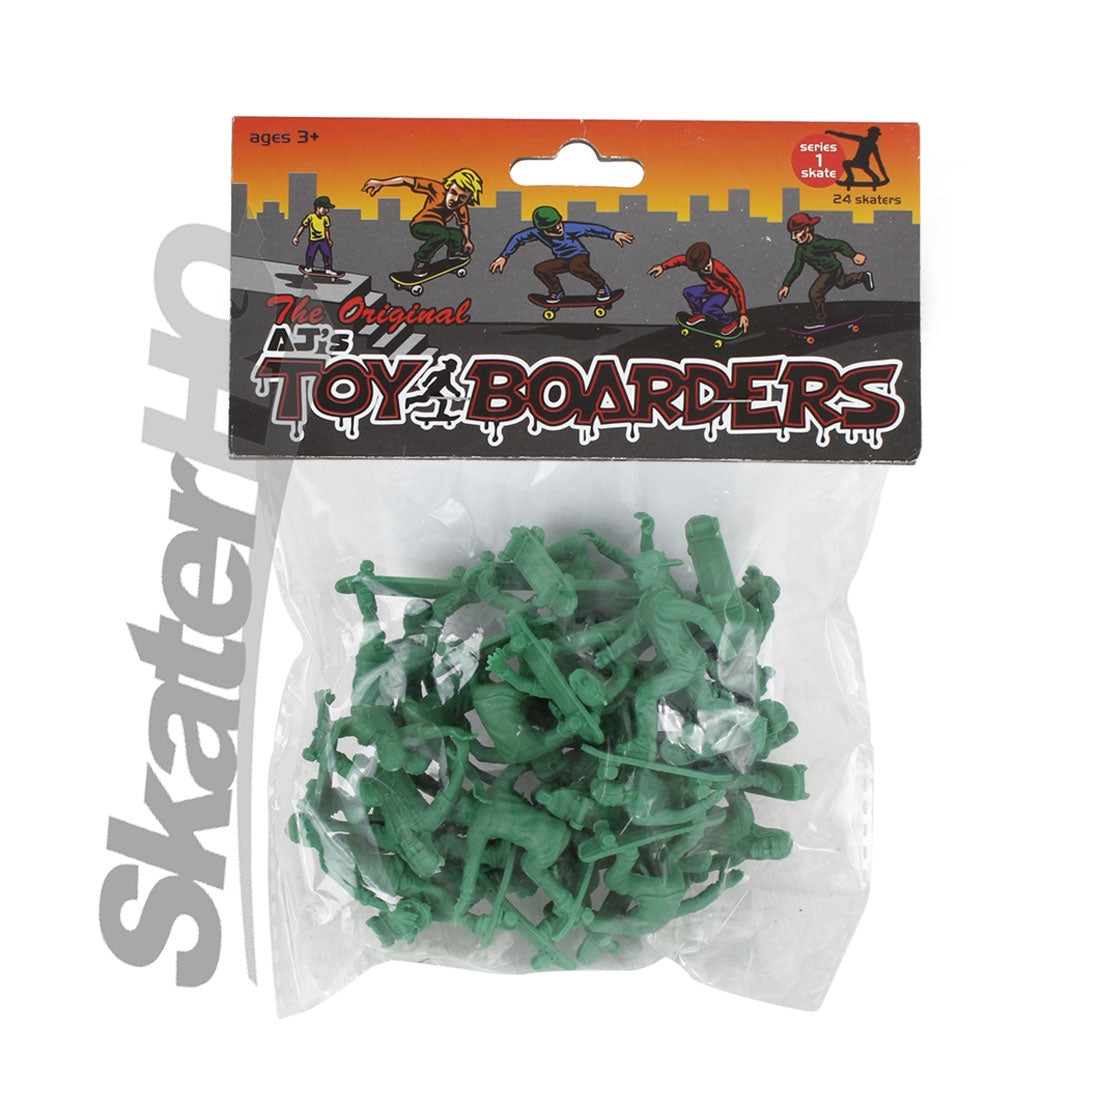 AJs Toy Boarders Skate Series 1 - Green Skateboard Accessories